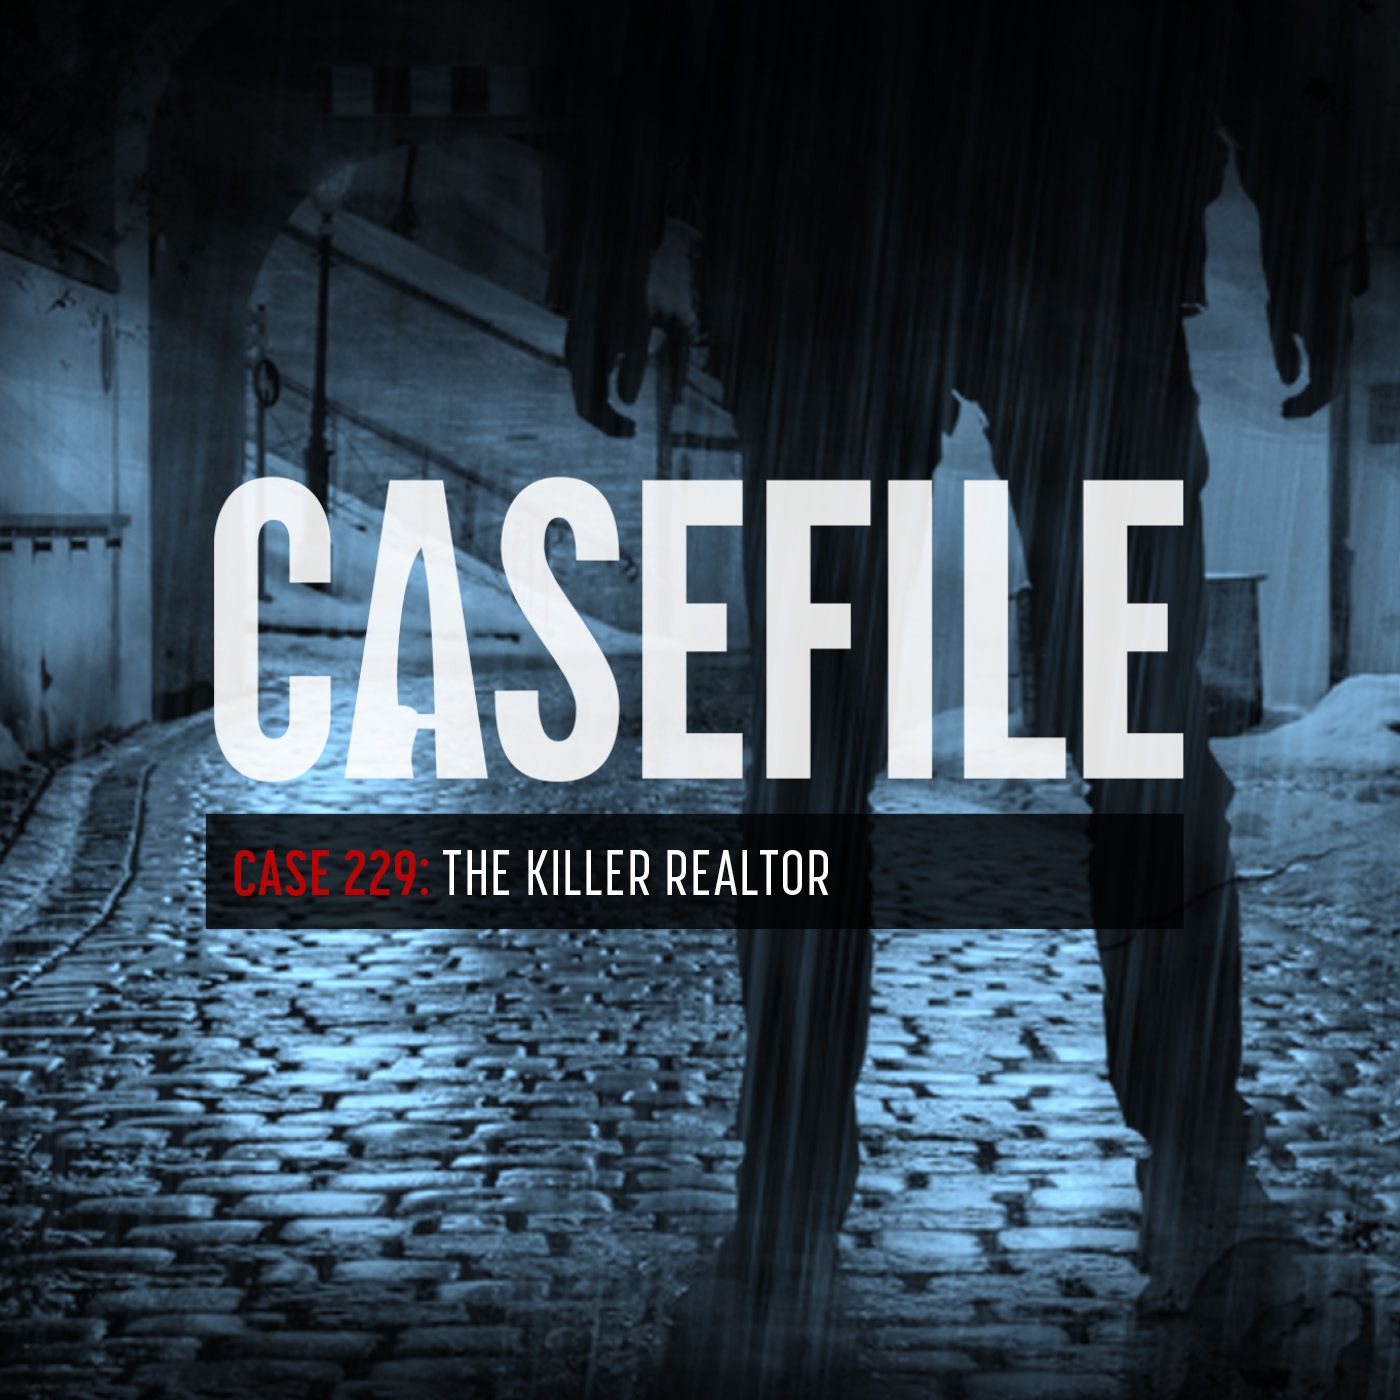 Case 229: The Killer Realtor